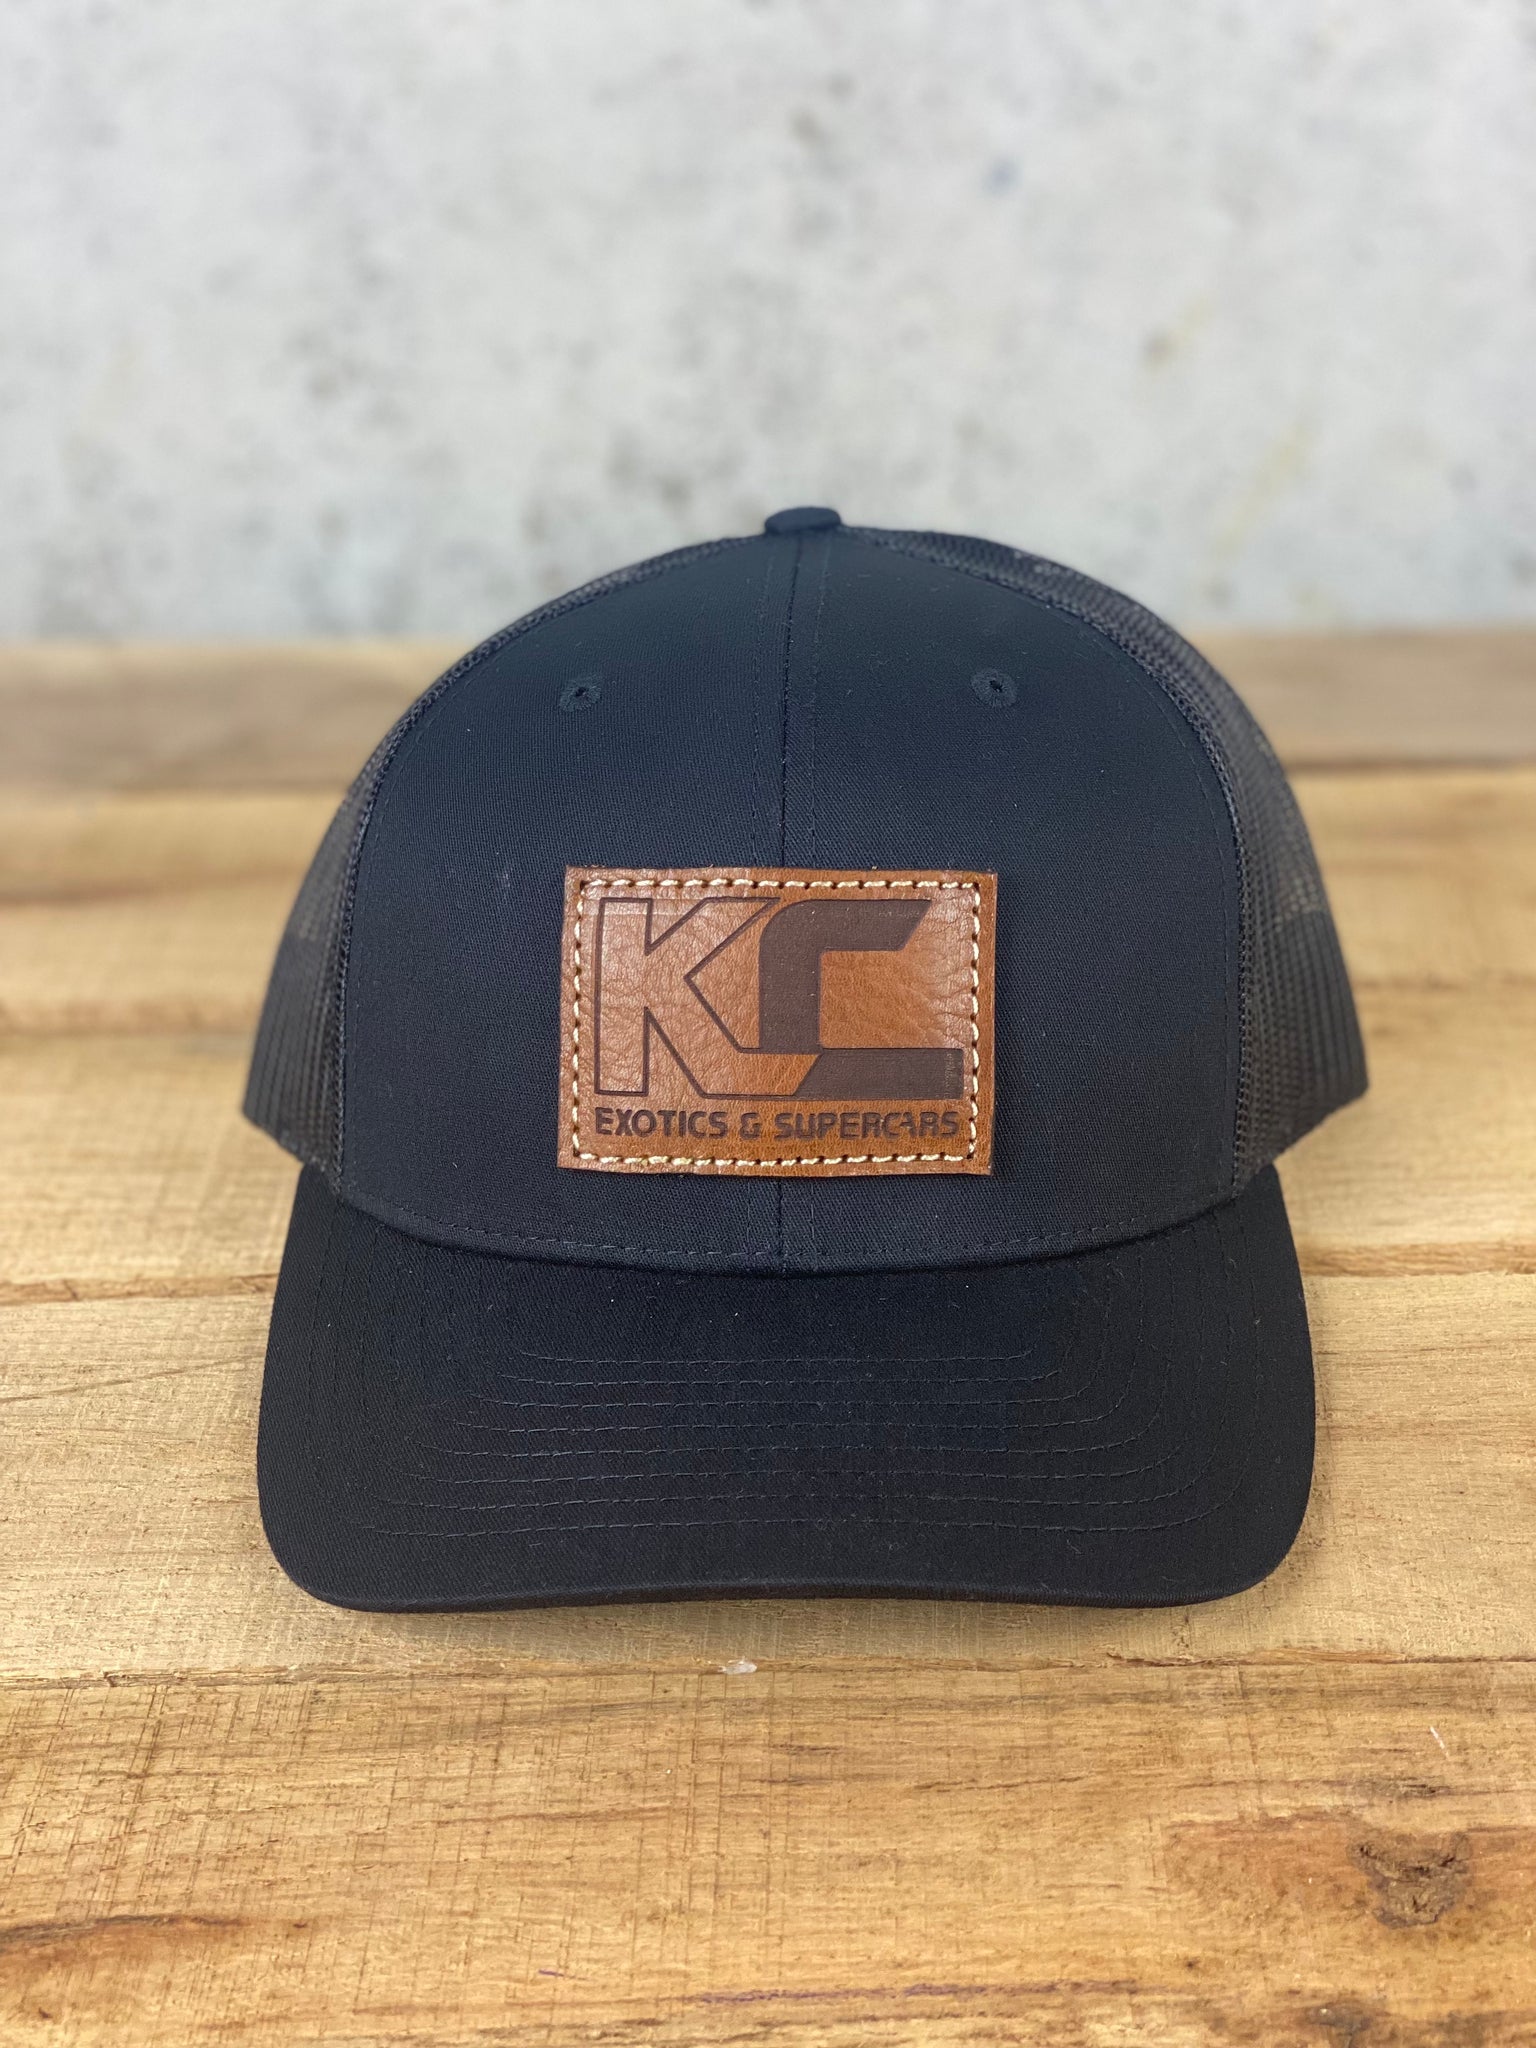 KC Exotics and Supercars Club Black Hat